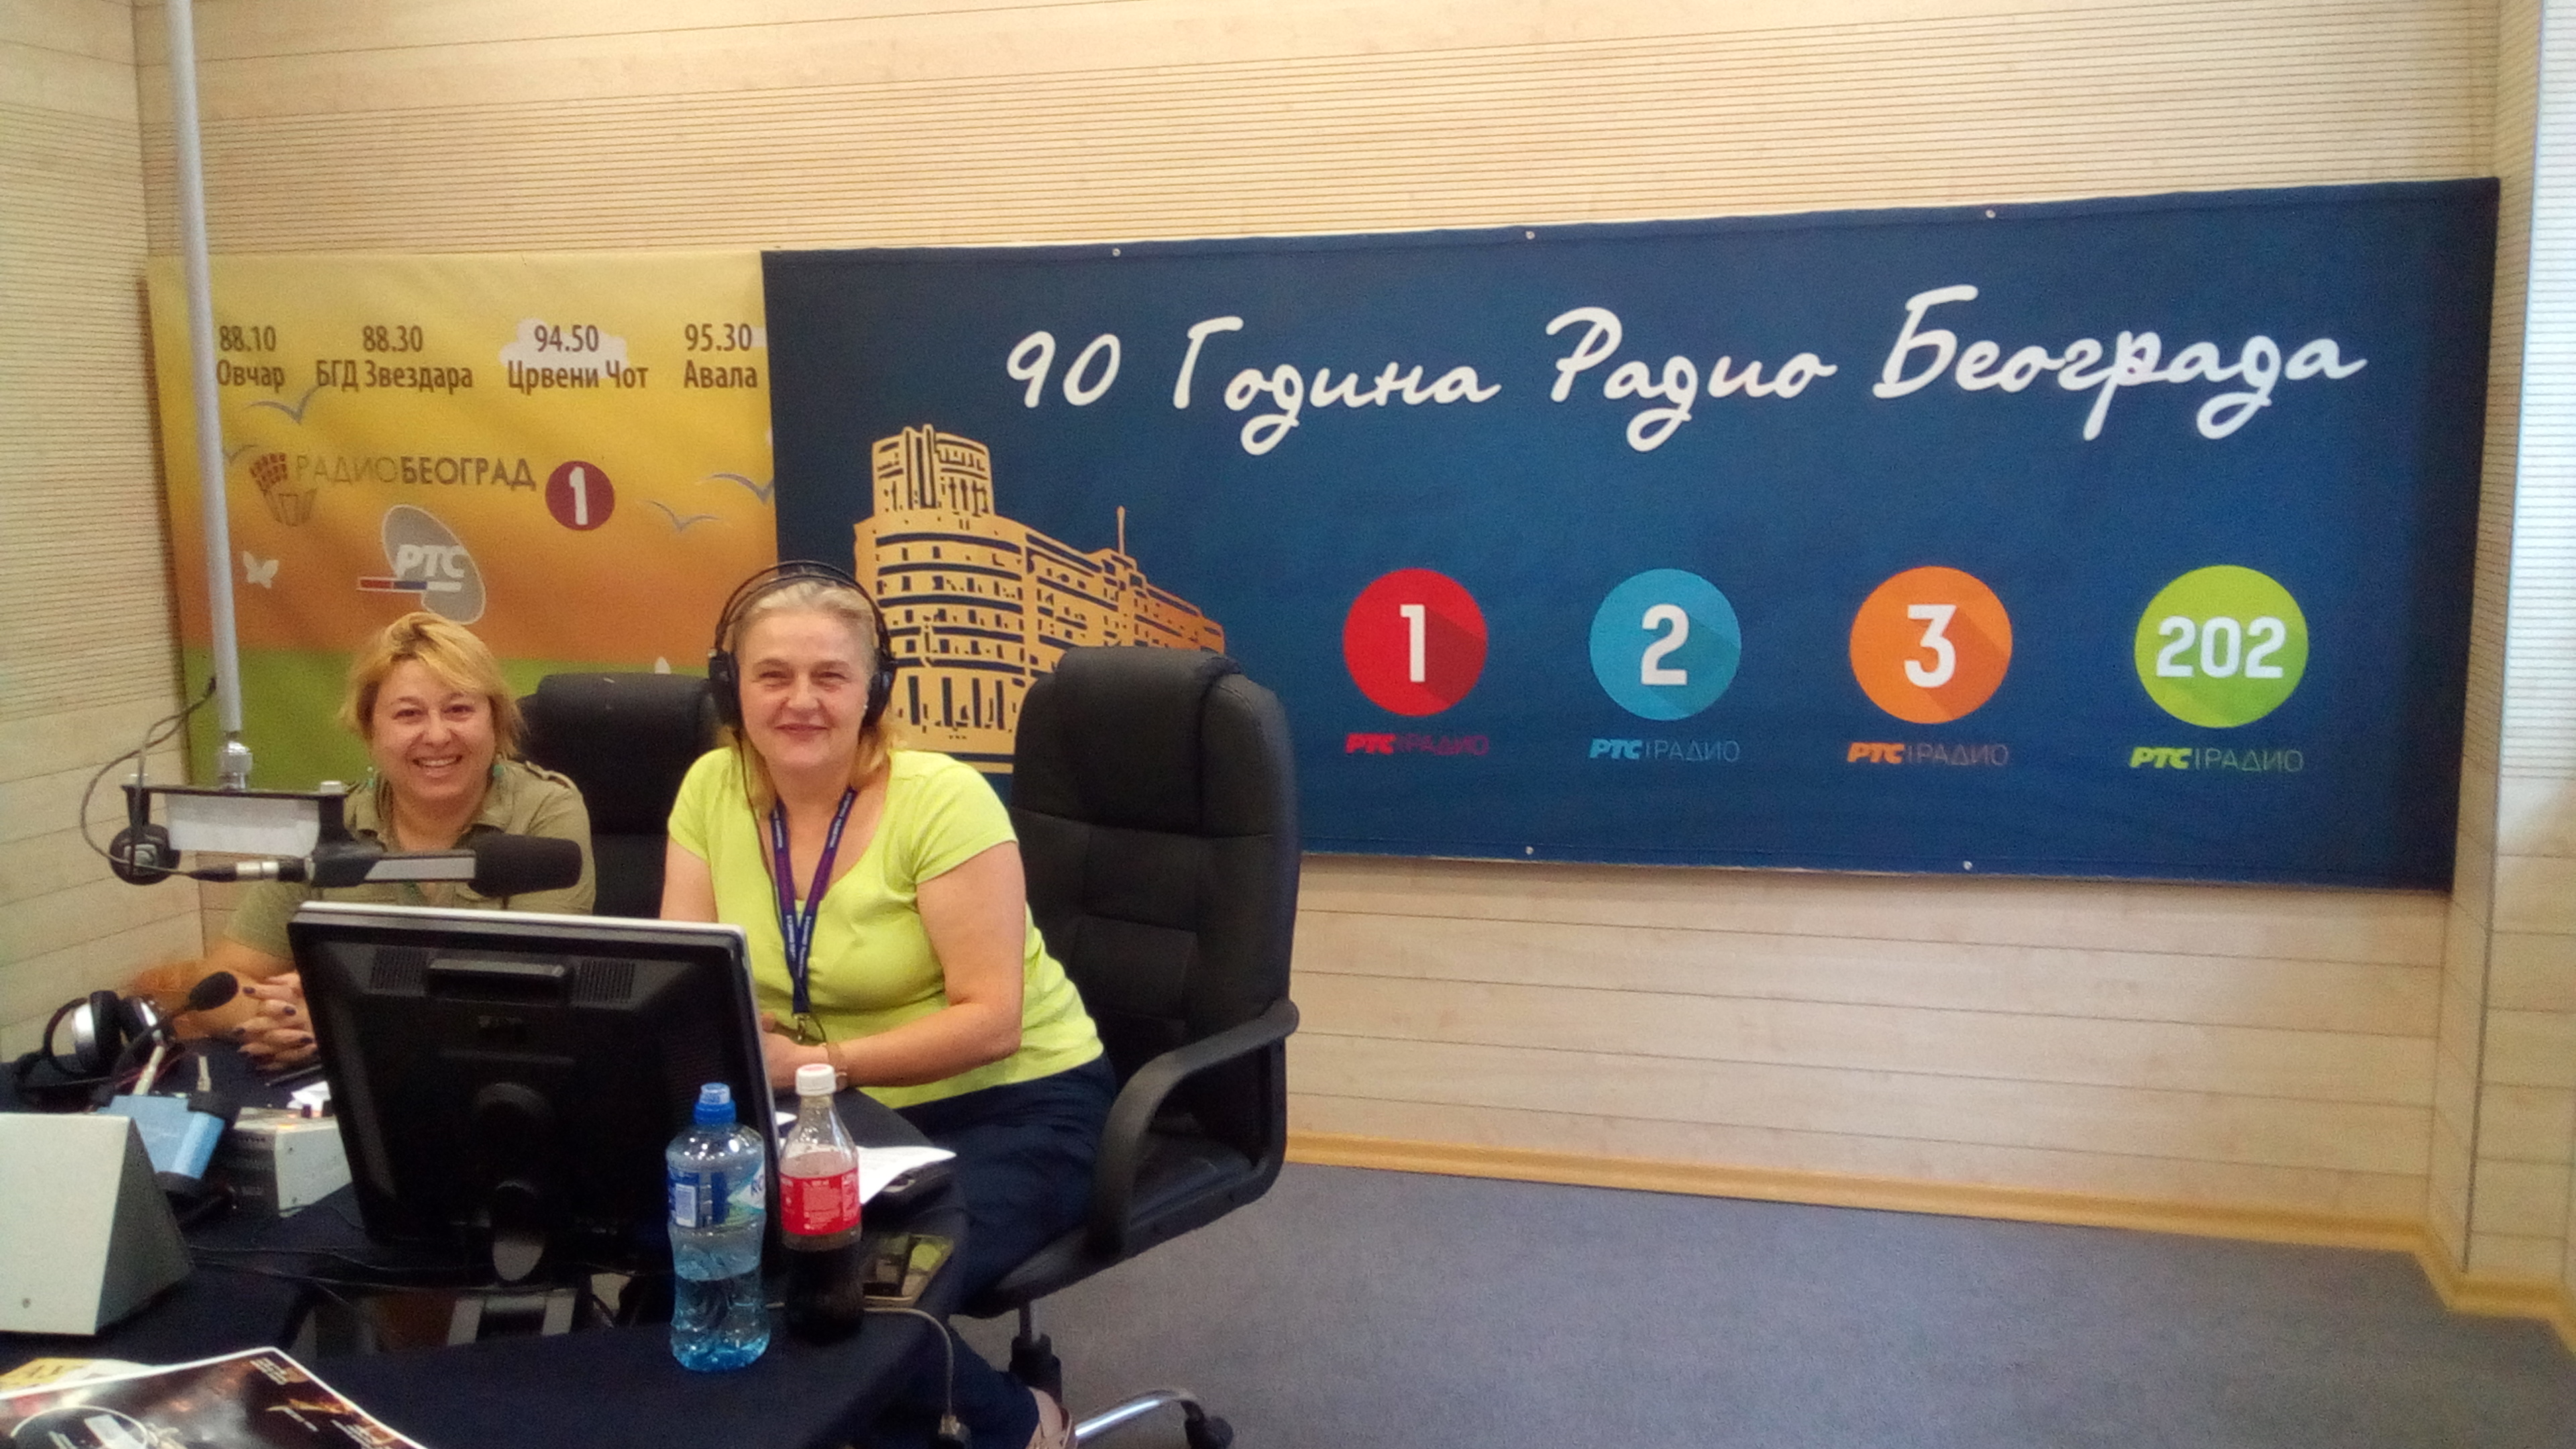 Radio-Beograd-6